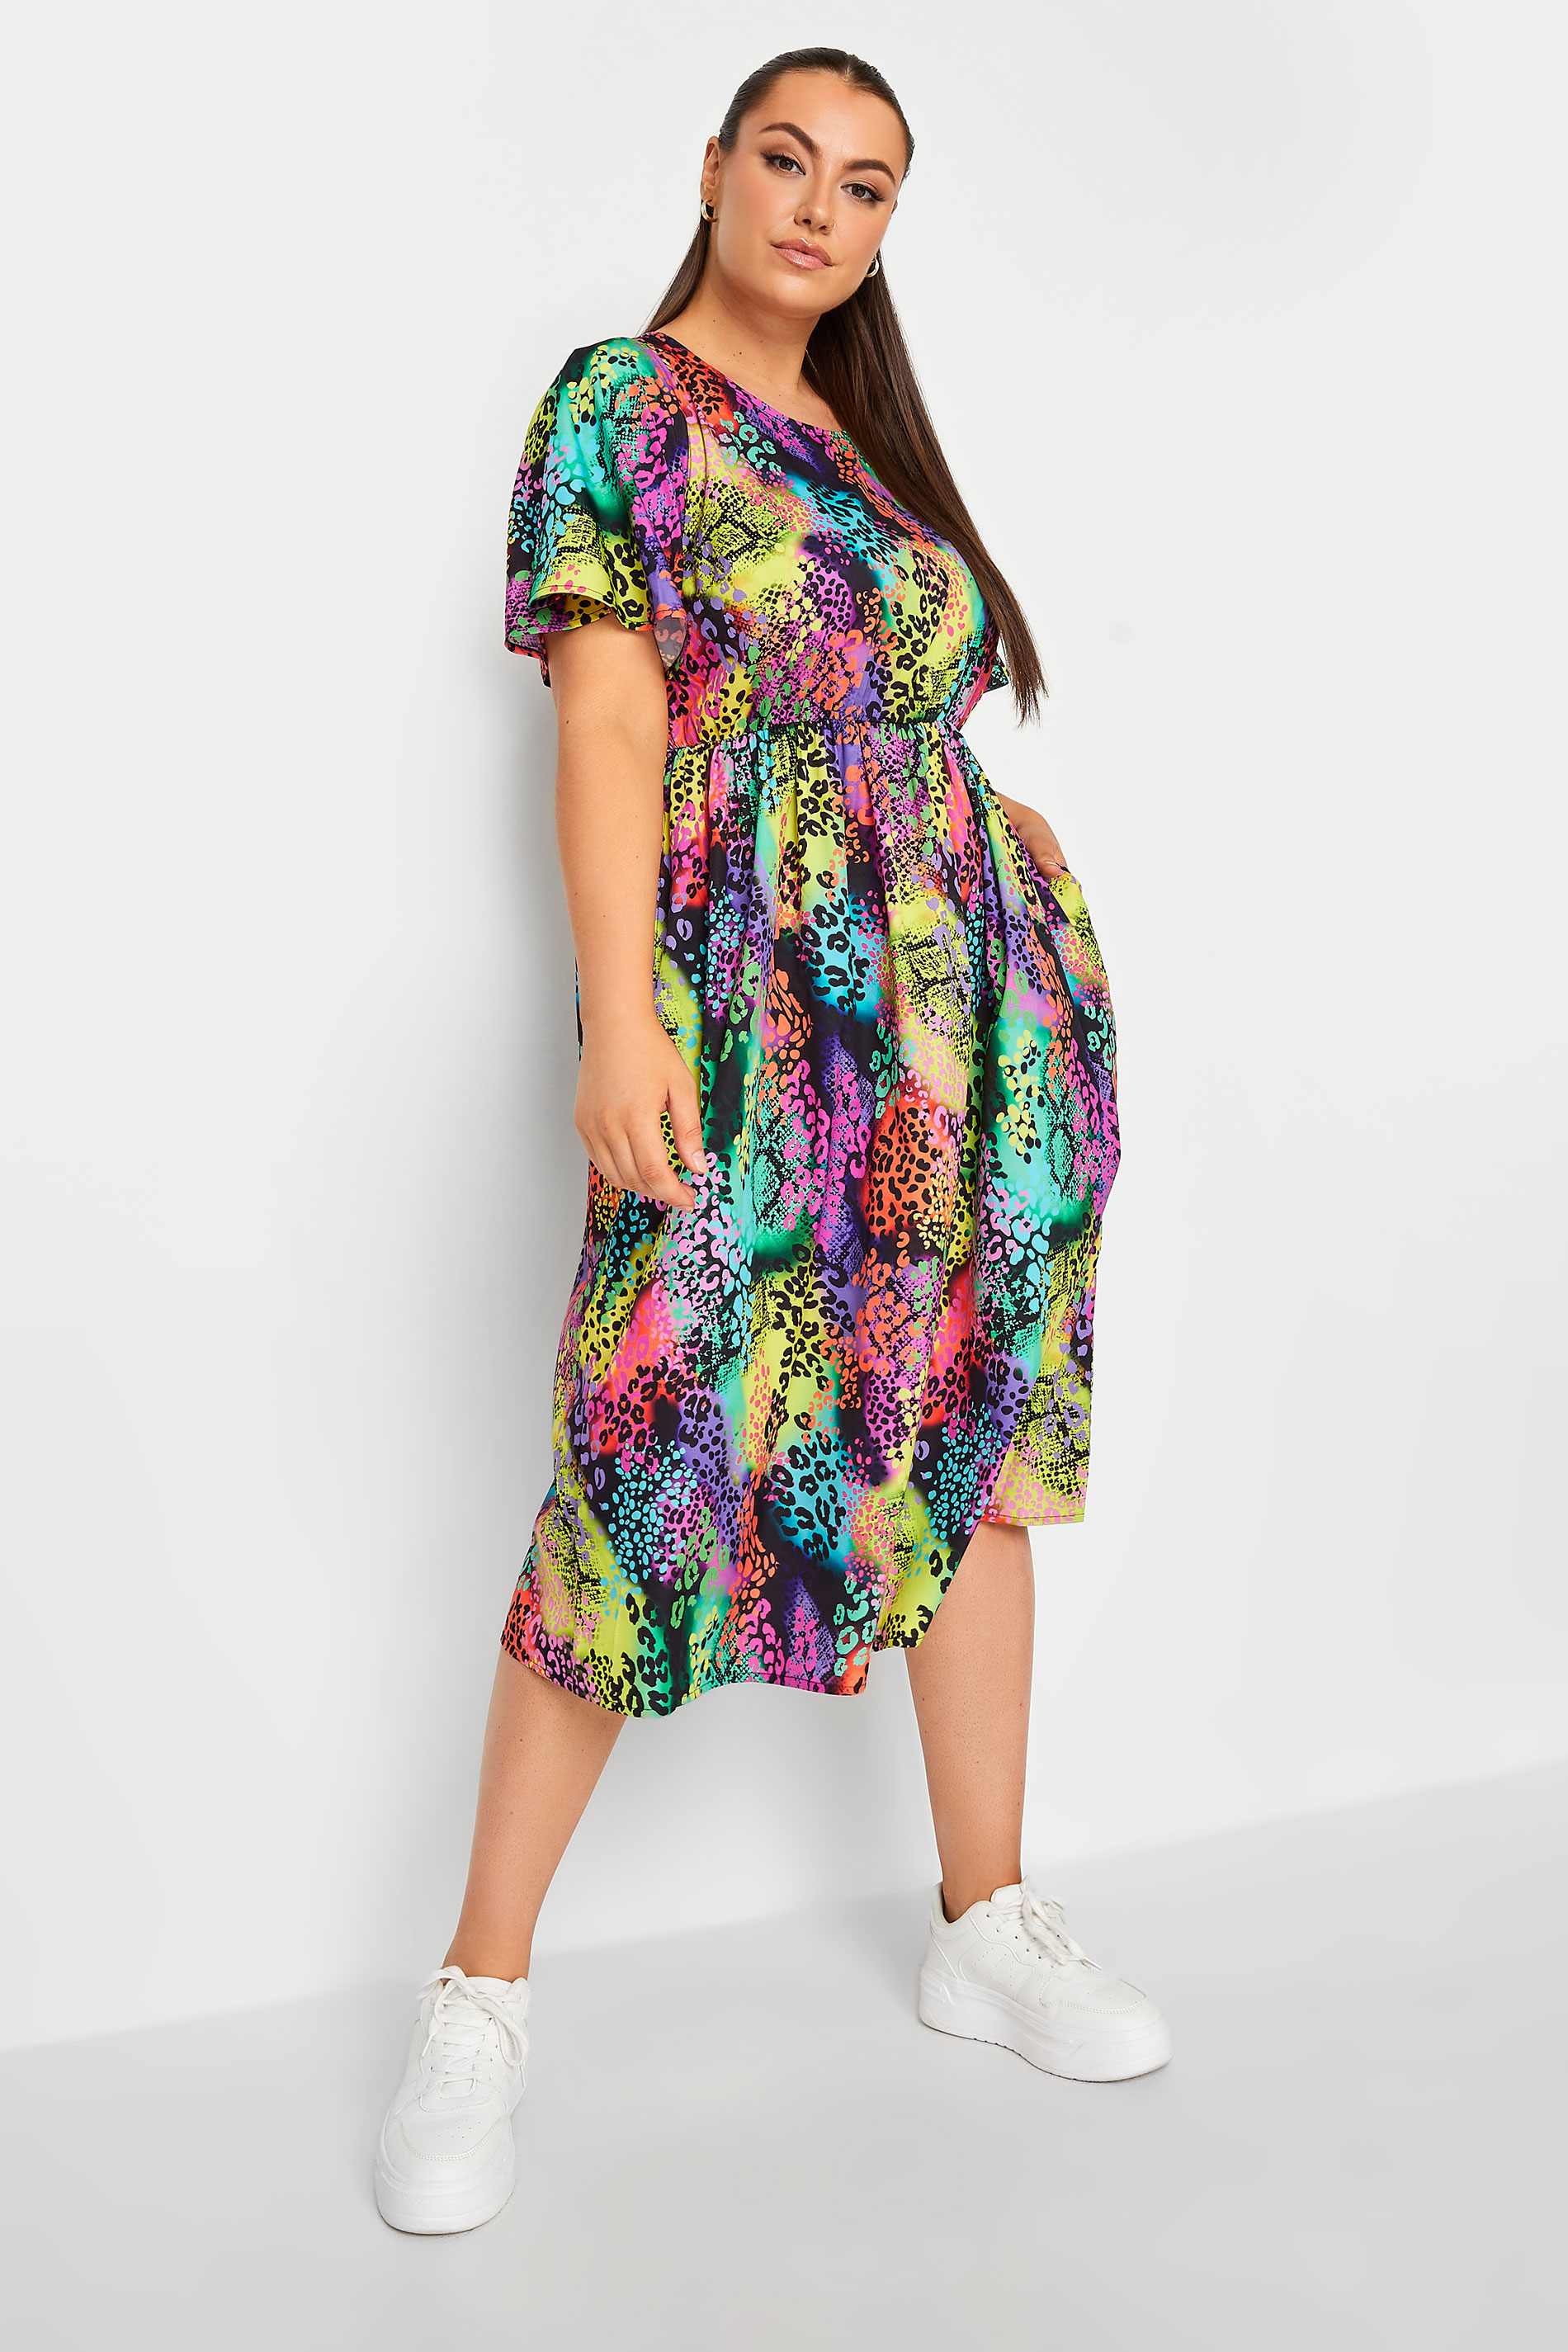 YOURS Curve Plus Size Black Rainbow Leopard Print Midi Dress | Yours Clothing  2